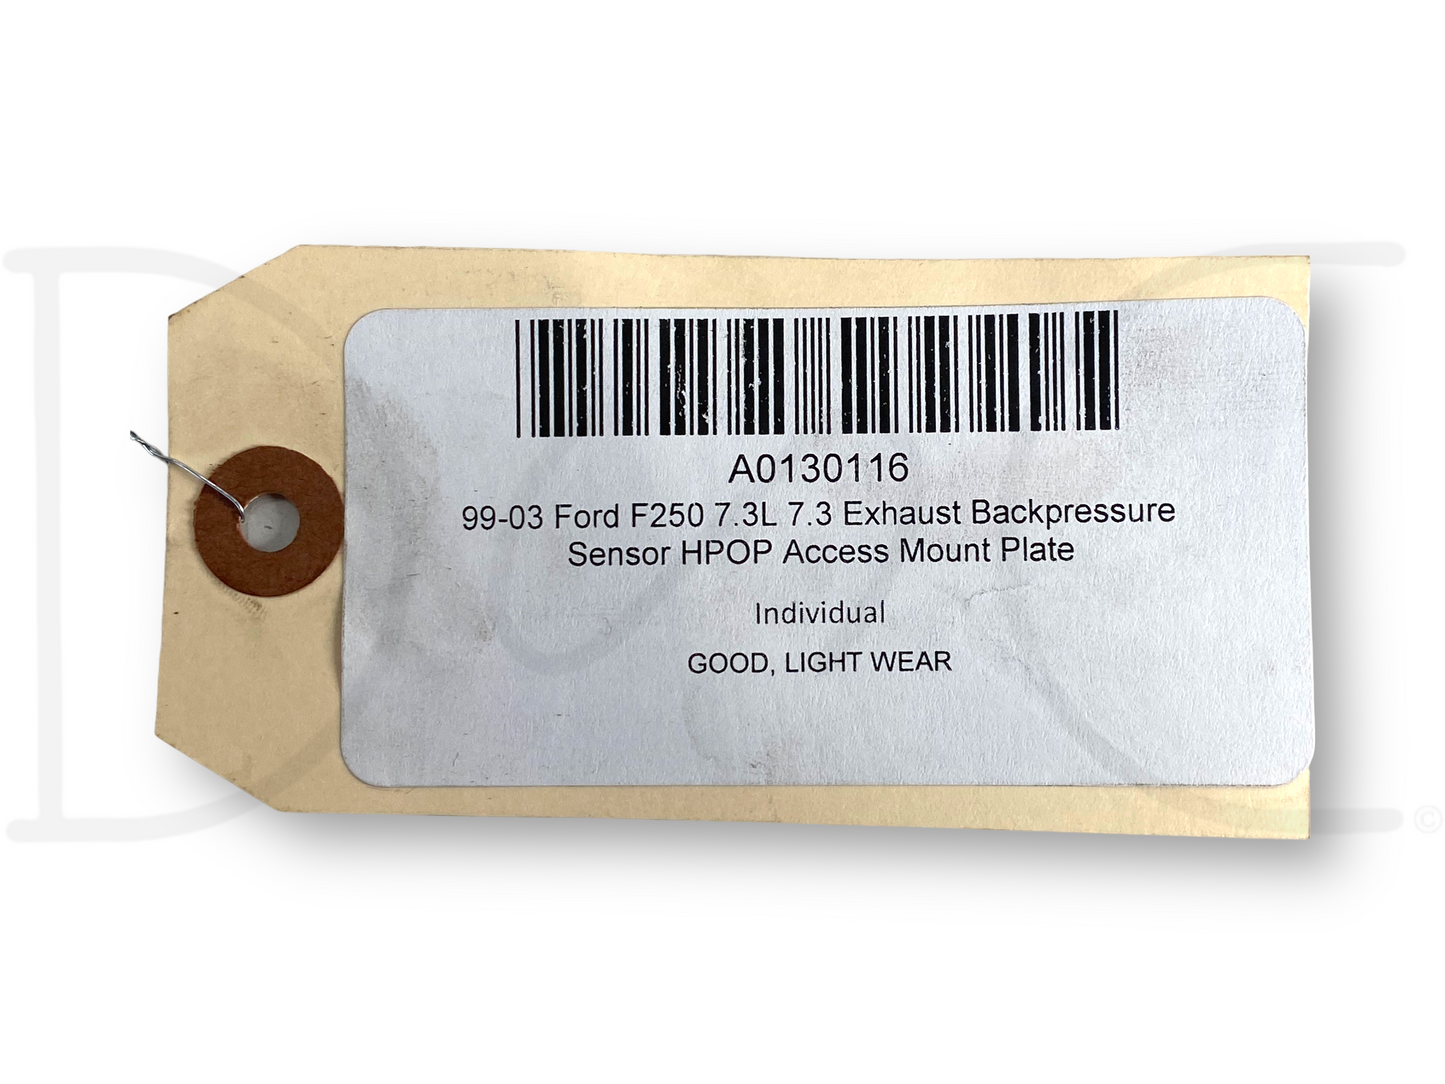 99-03 Ford F250 7.3L 7.3 Exhaust Backpressure Sensor HPOP Access Mount Plate